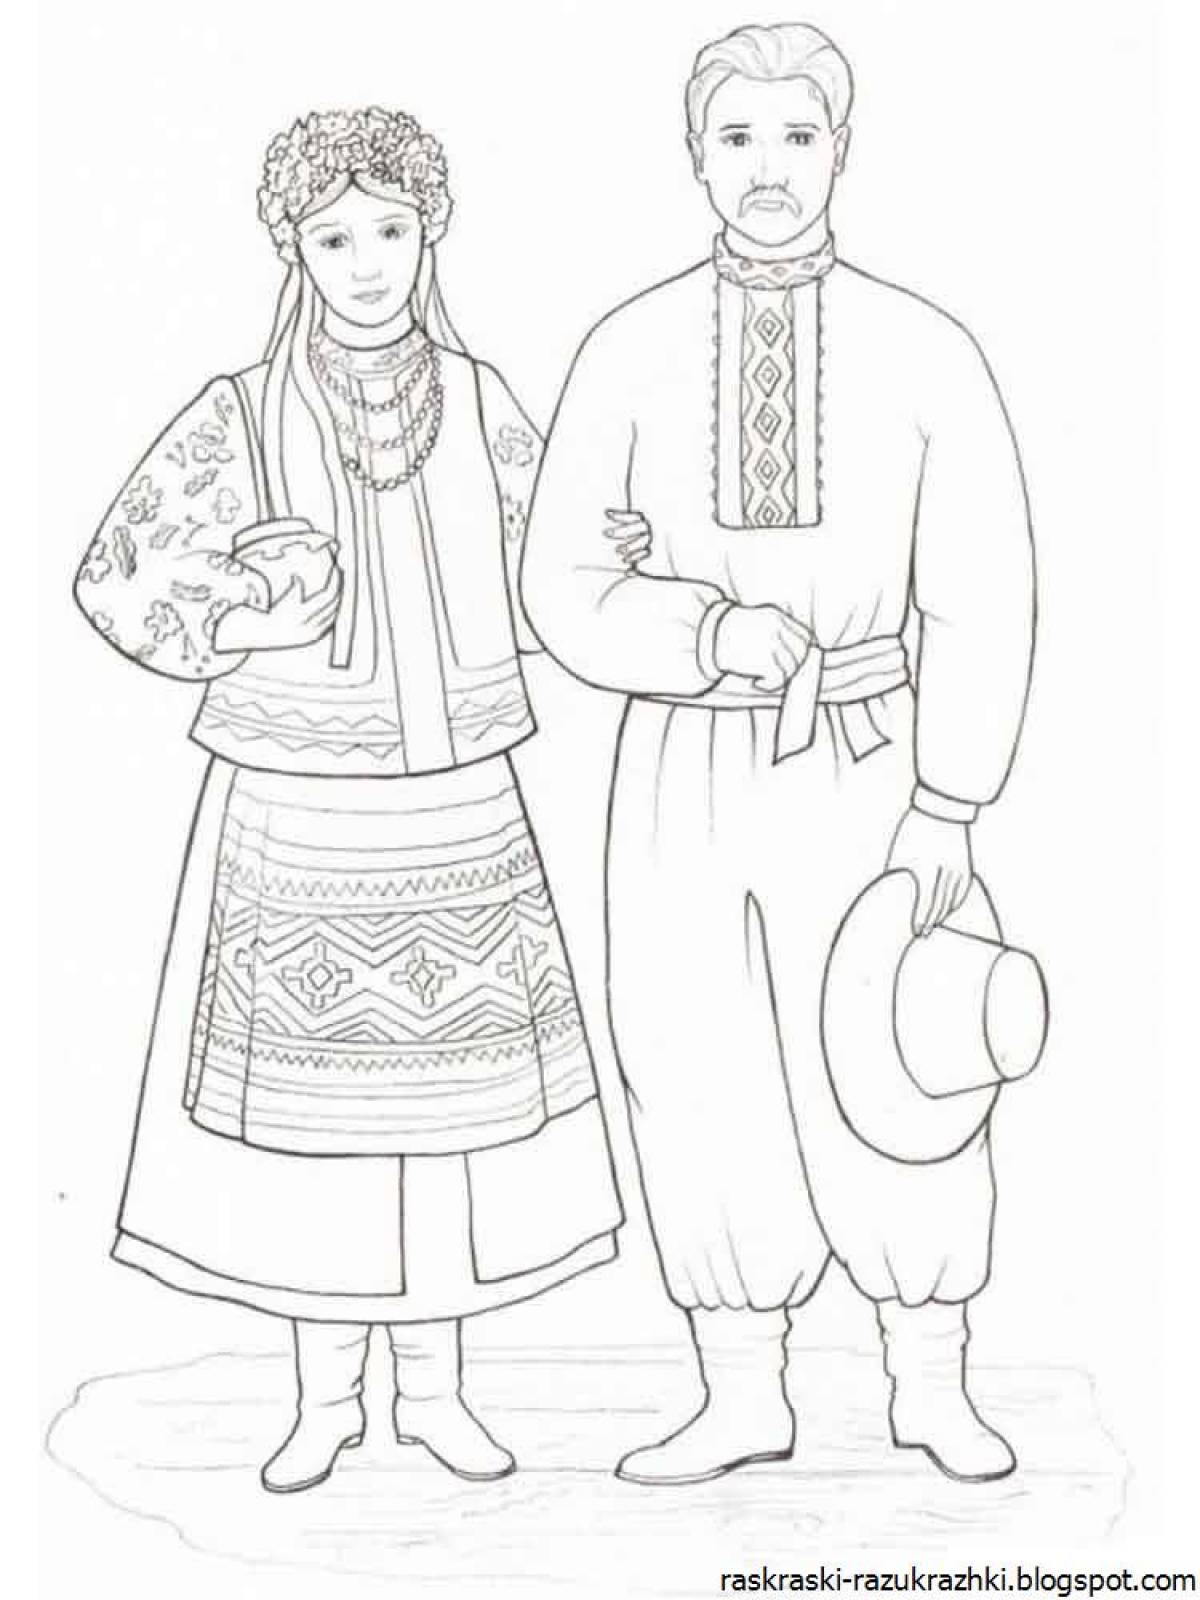 Coloring book of classic Russian folk costume